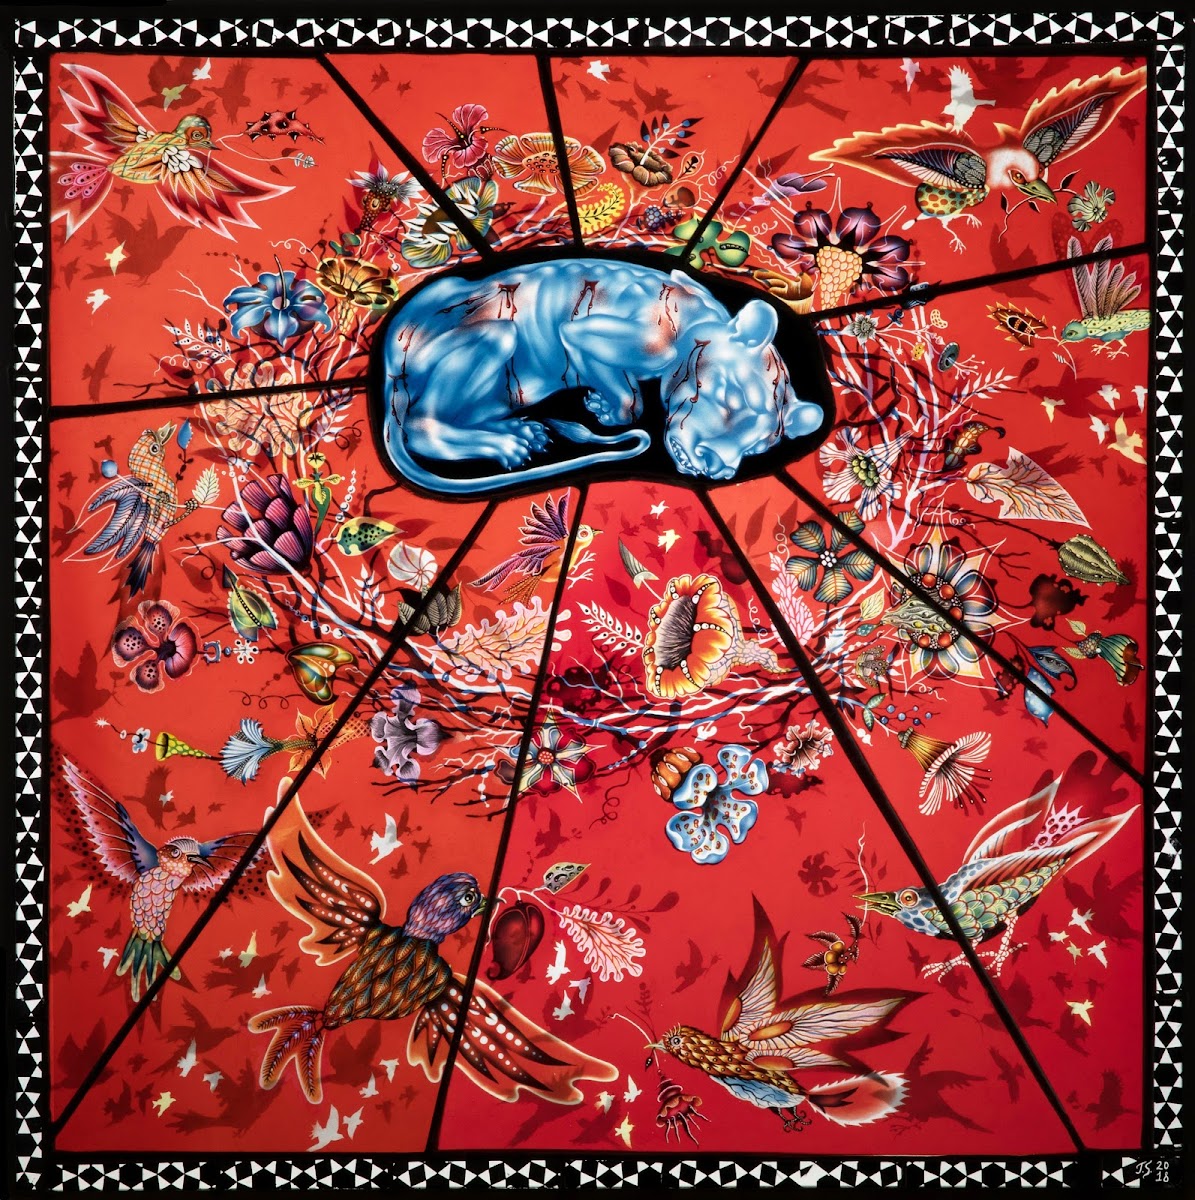 Murdered Animal (2019, stained glass lightbox, 28 x 28 x 3") by Judith Schaechter 83 GL